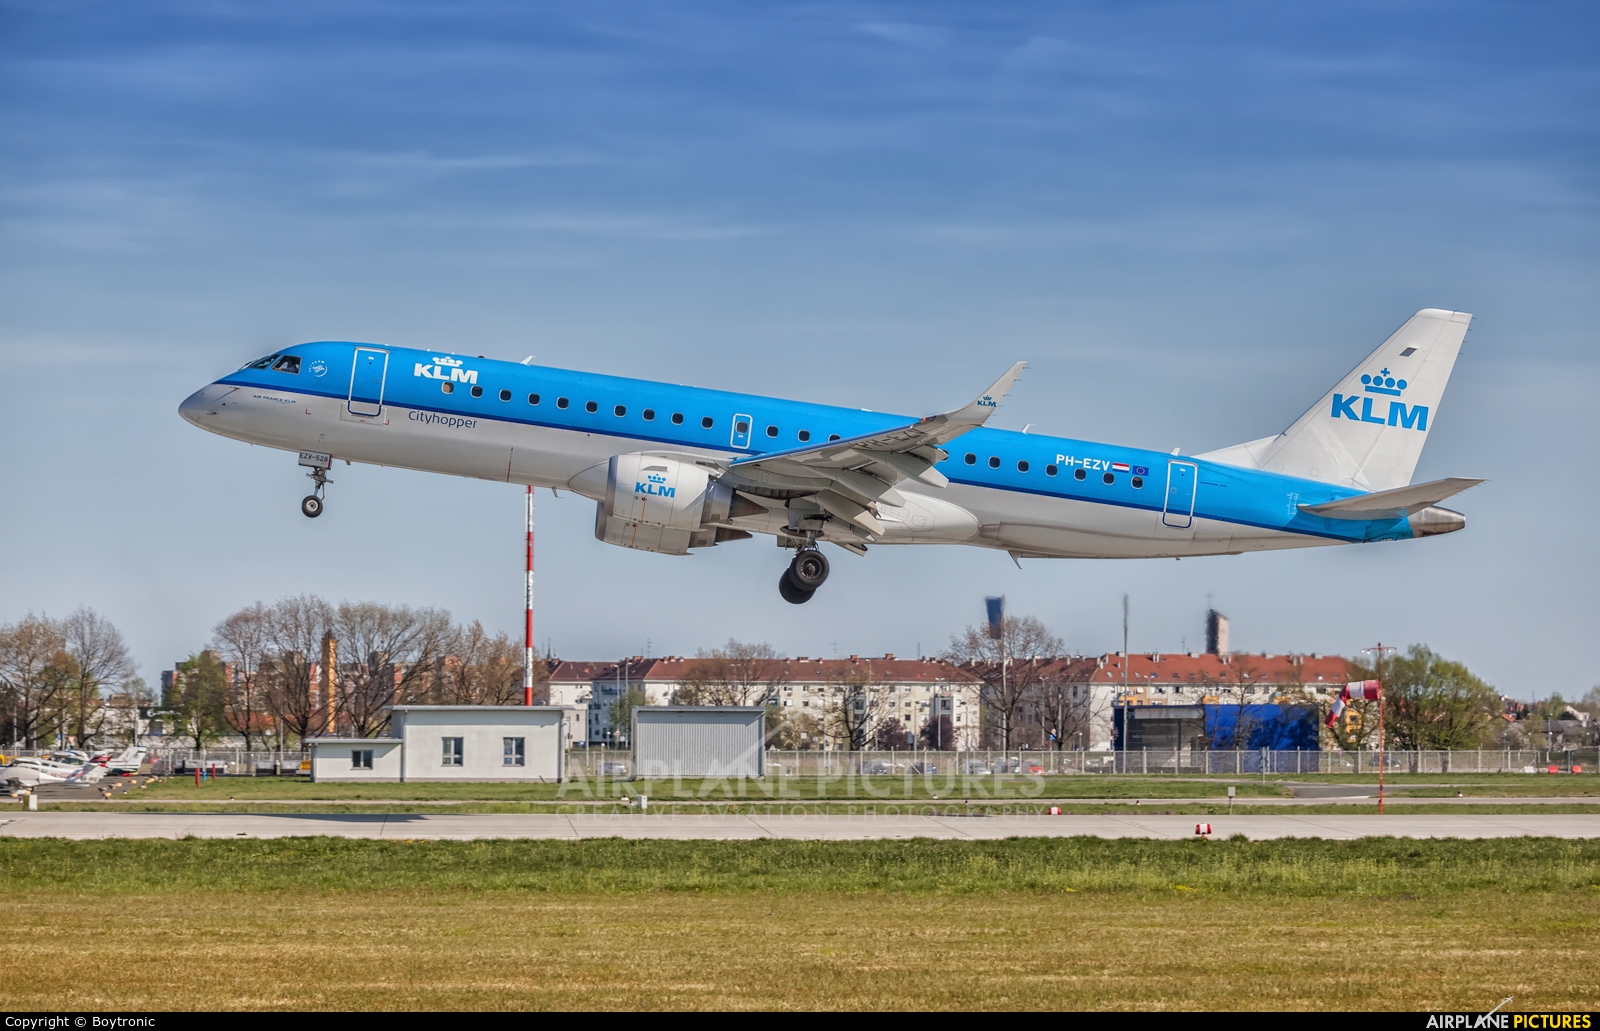 KLM Cityhopper PH-EZV aircraft at Zagreb